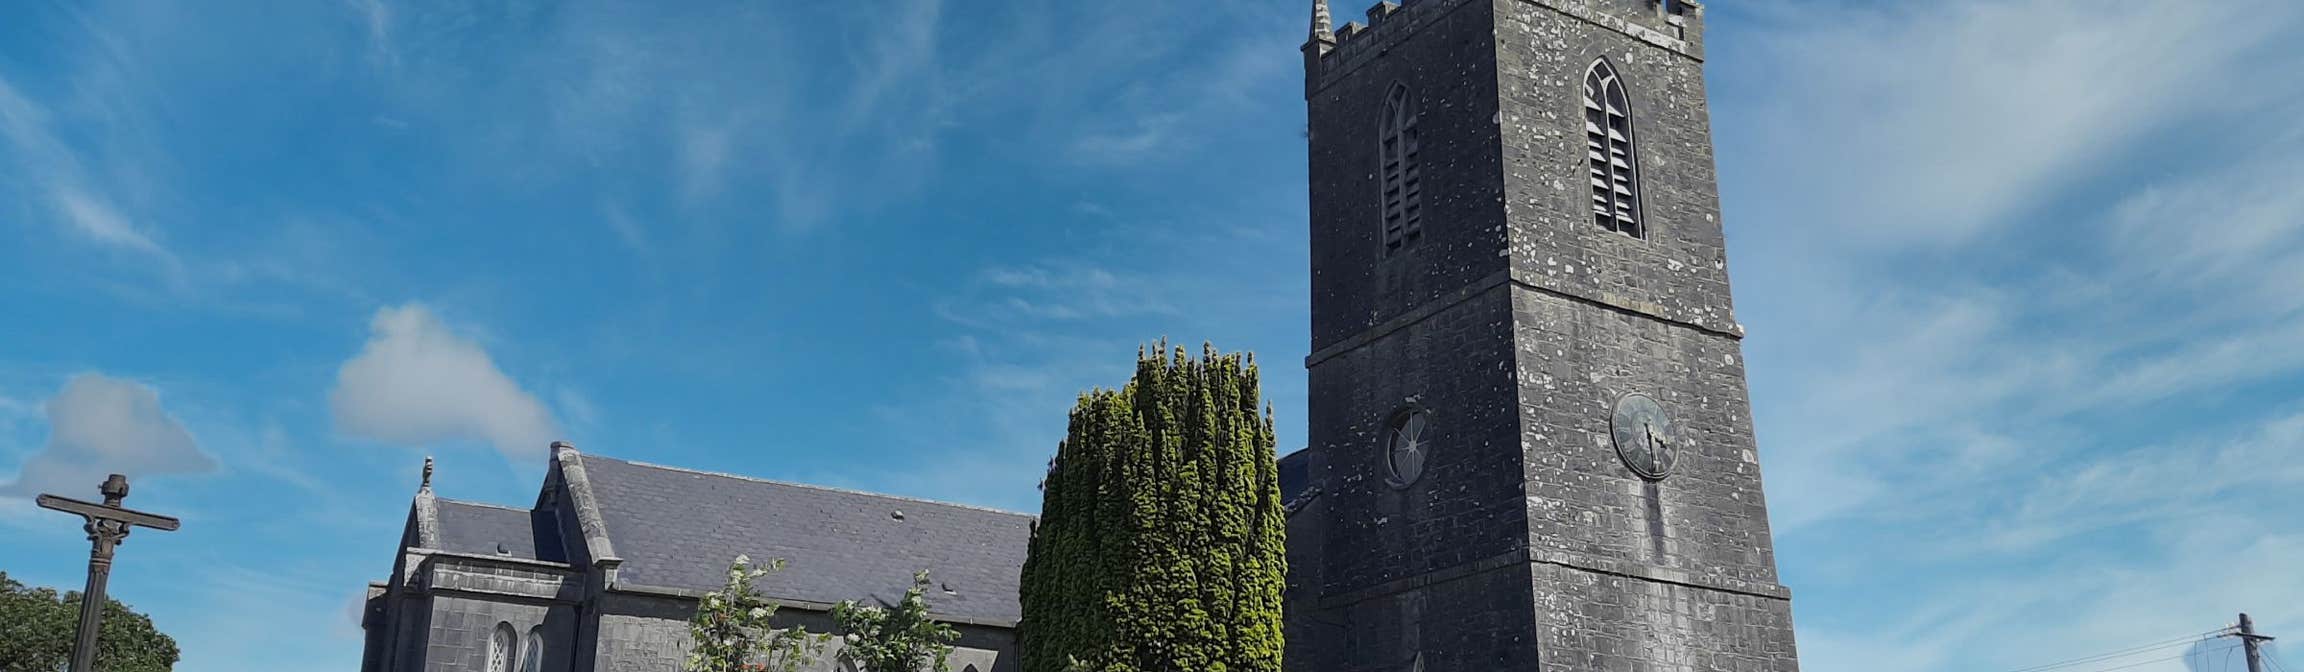 Image of a church in Collooney in County Sligo